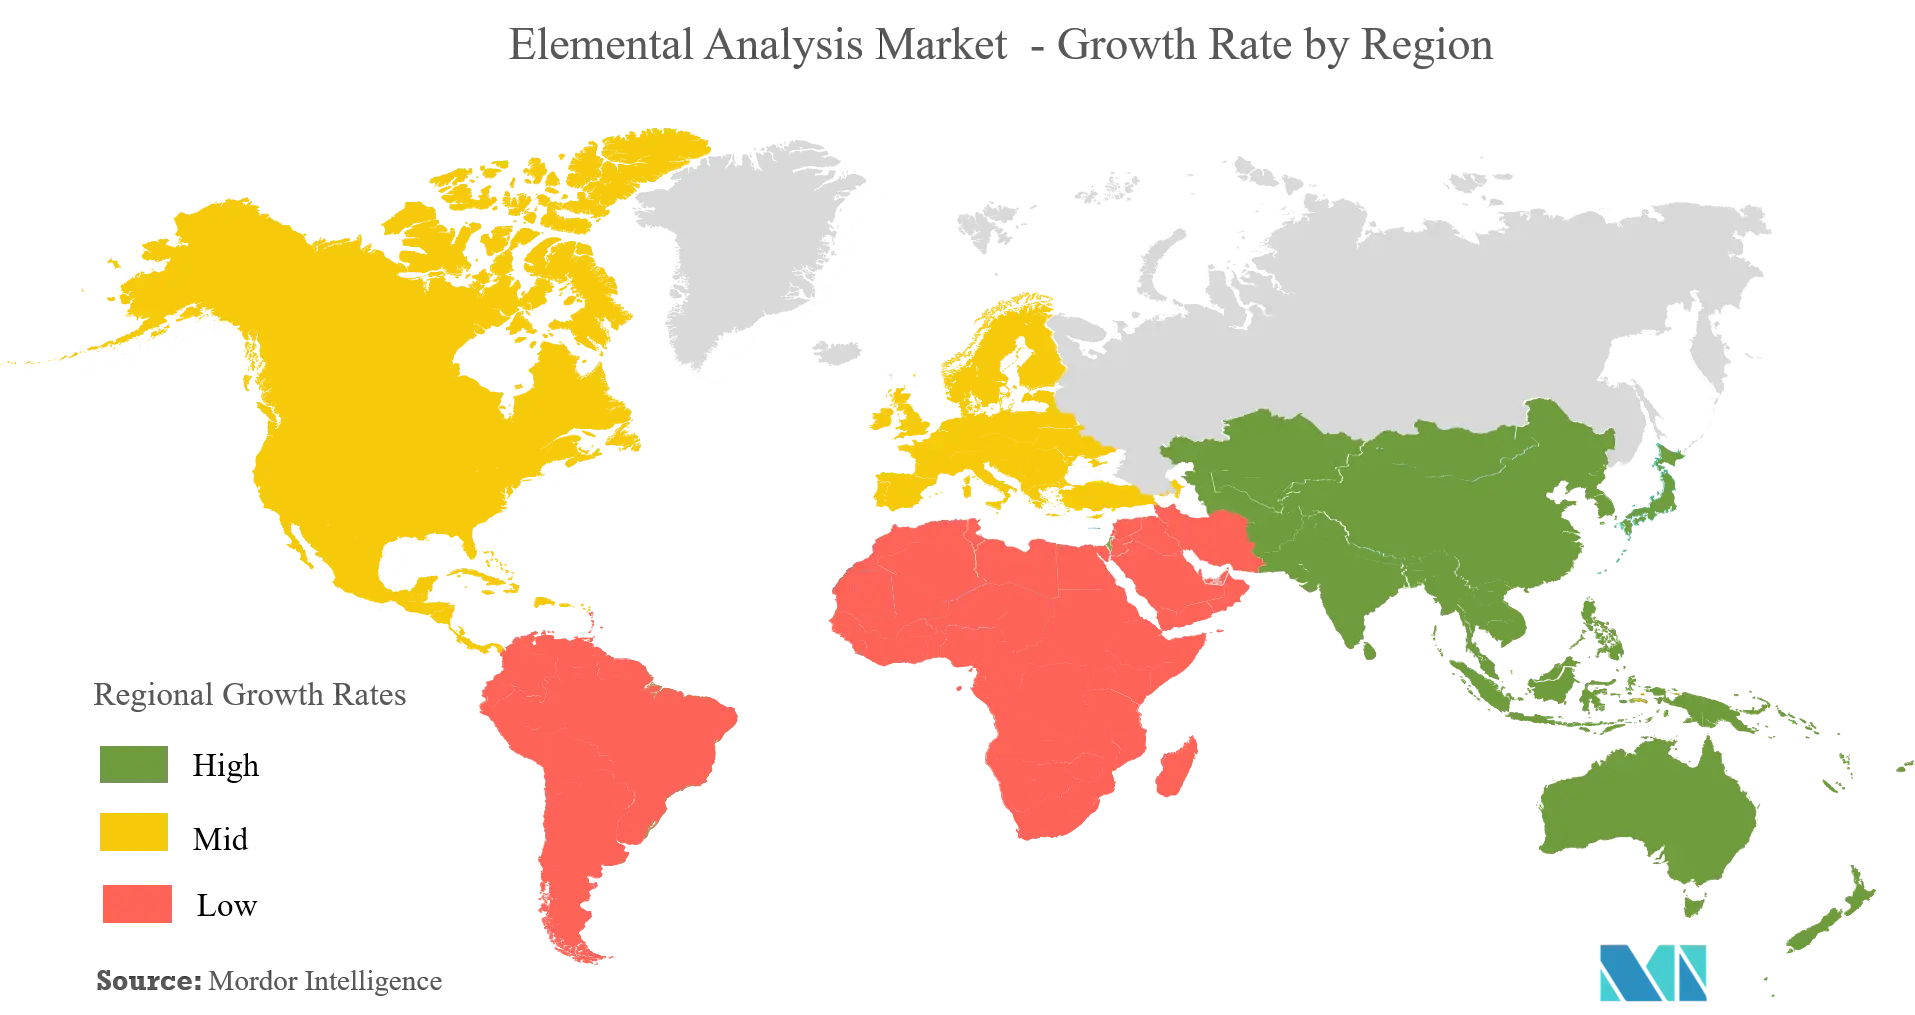 Elemental Analysis Market Report